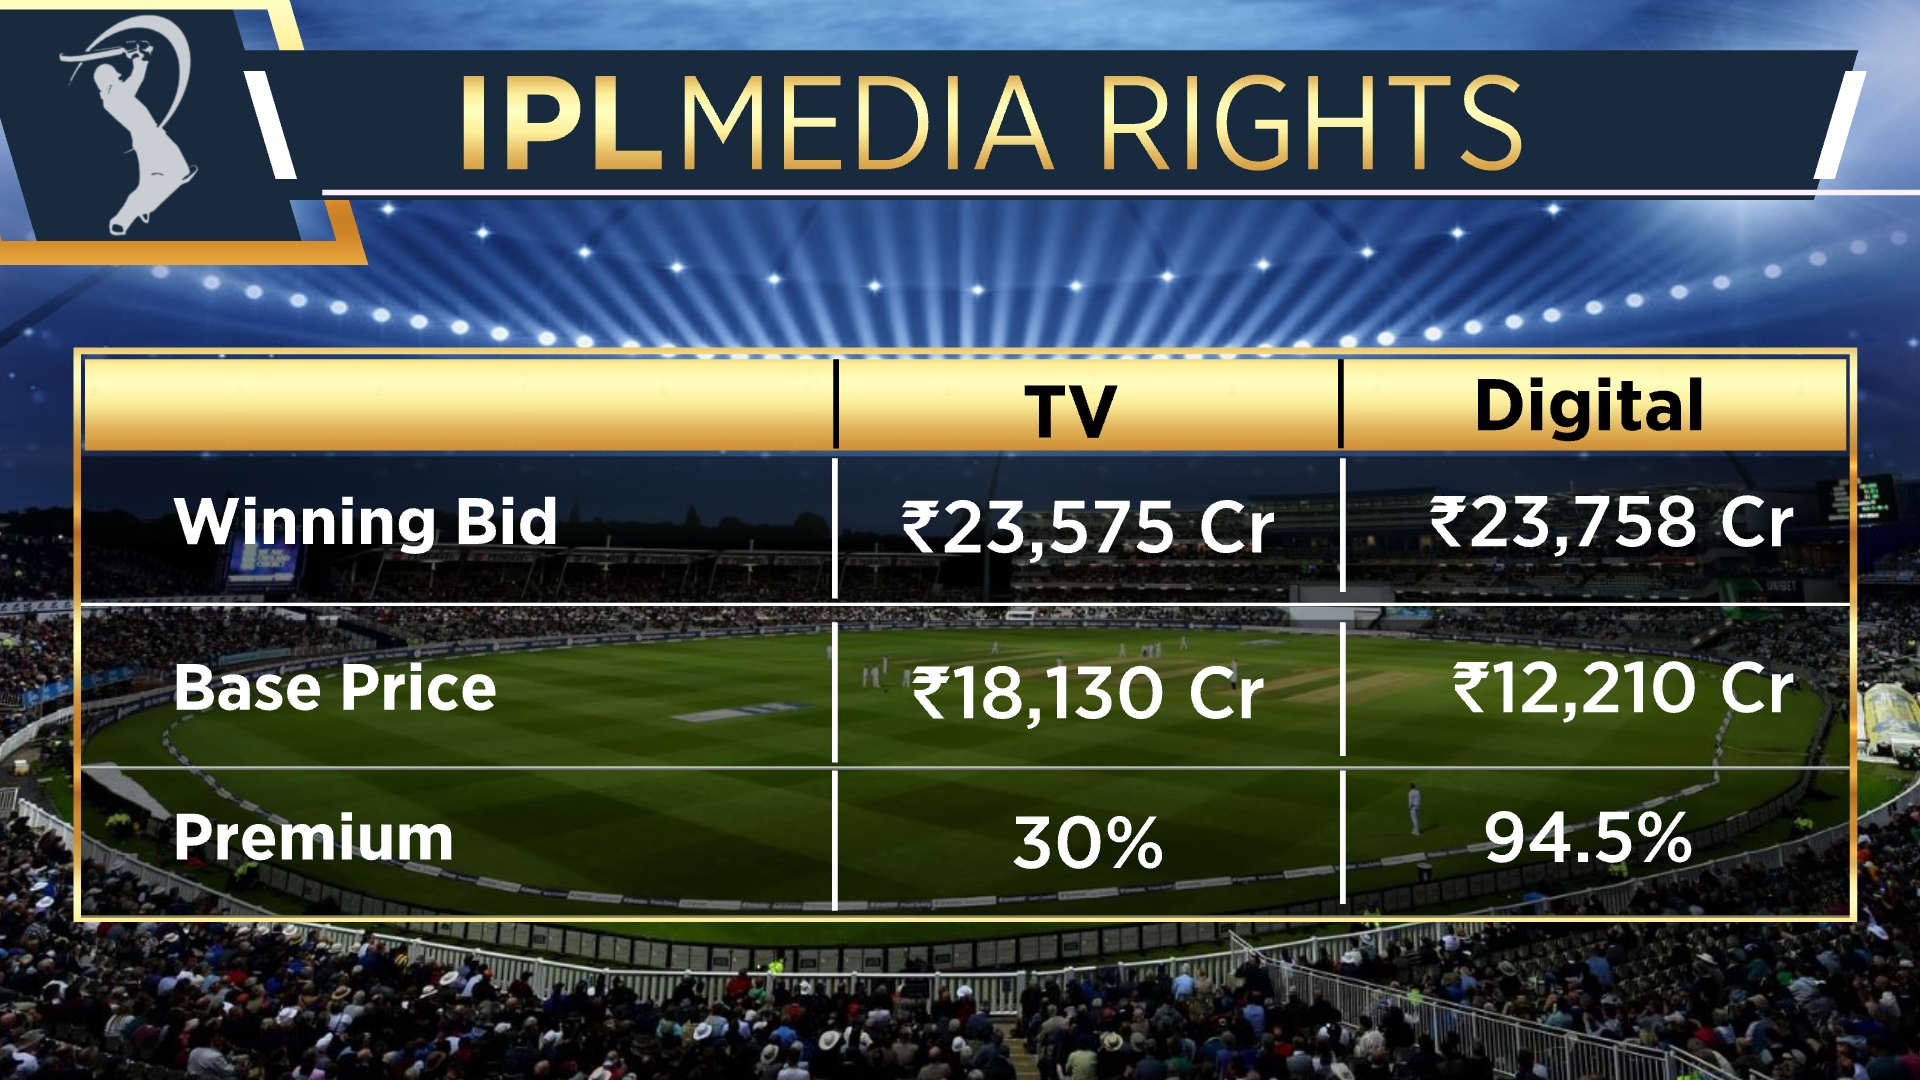 Disney Star, bag IPL media rights in mega broadcast deal